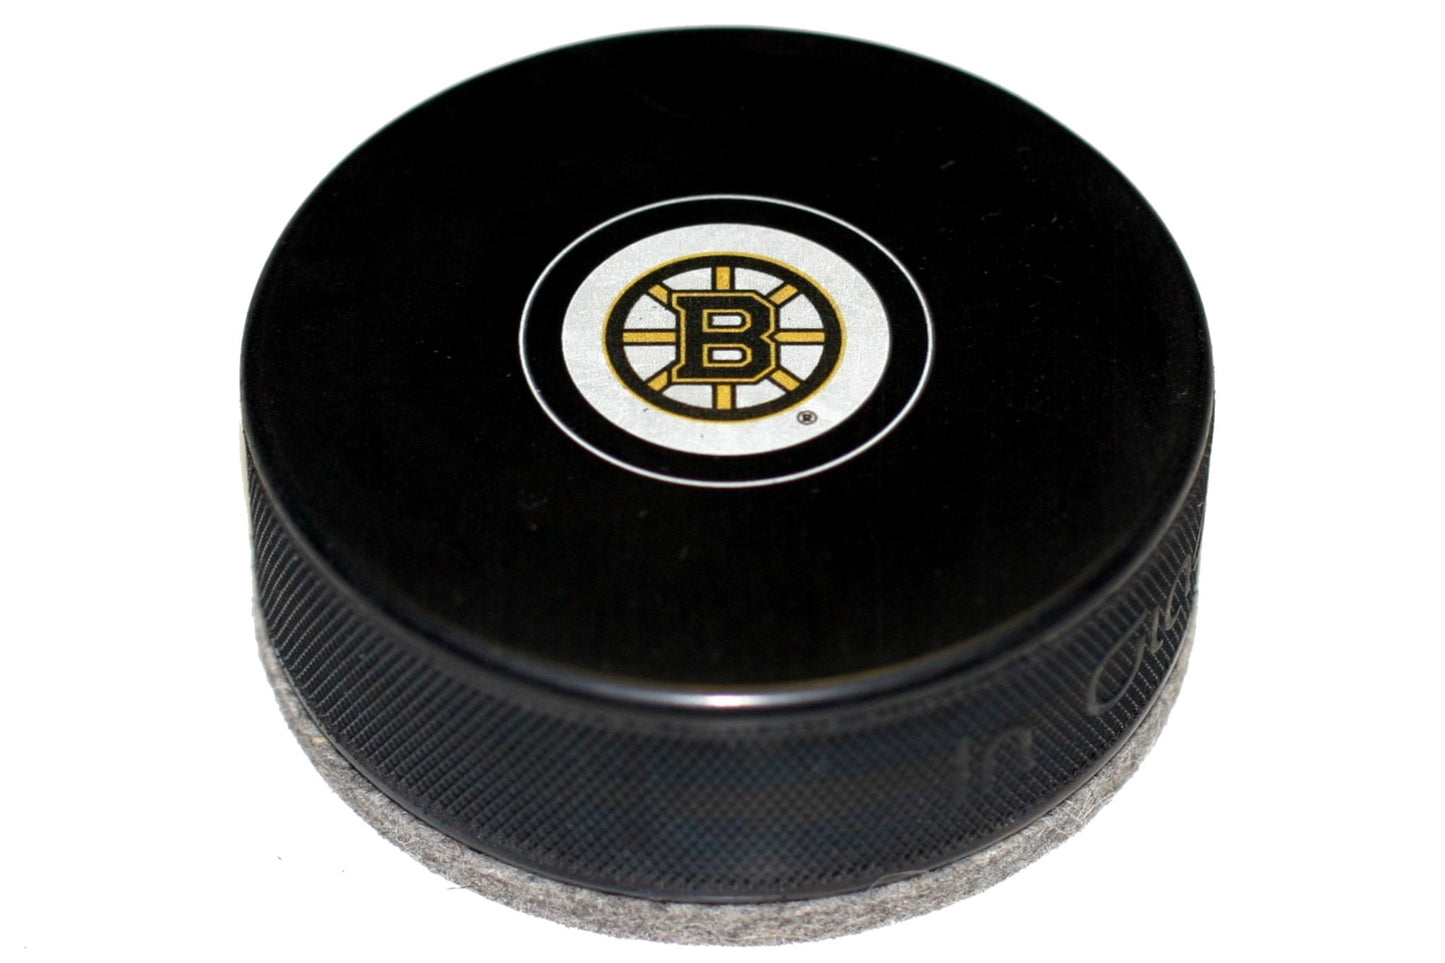 Boston Bruins Autograph Series Hockey Puck Board Eraser For Chalk & Whiteboards